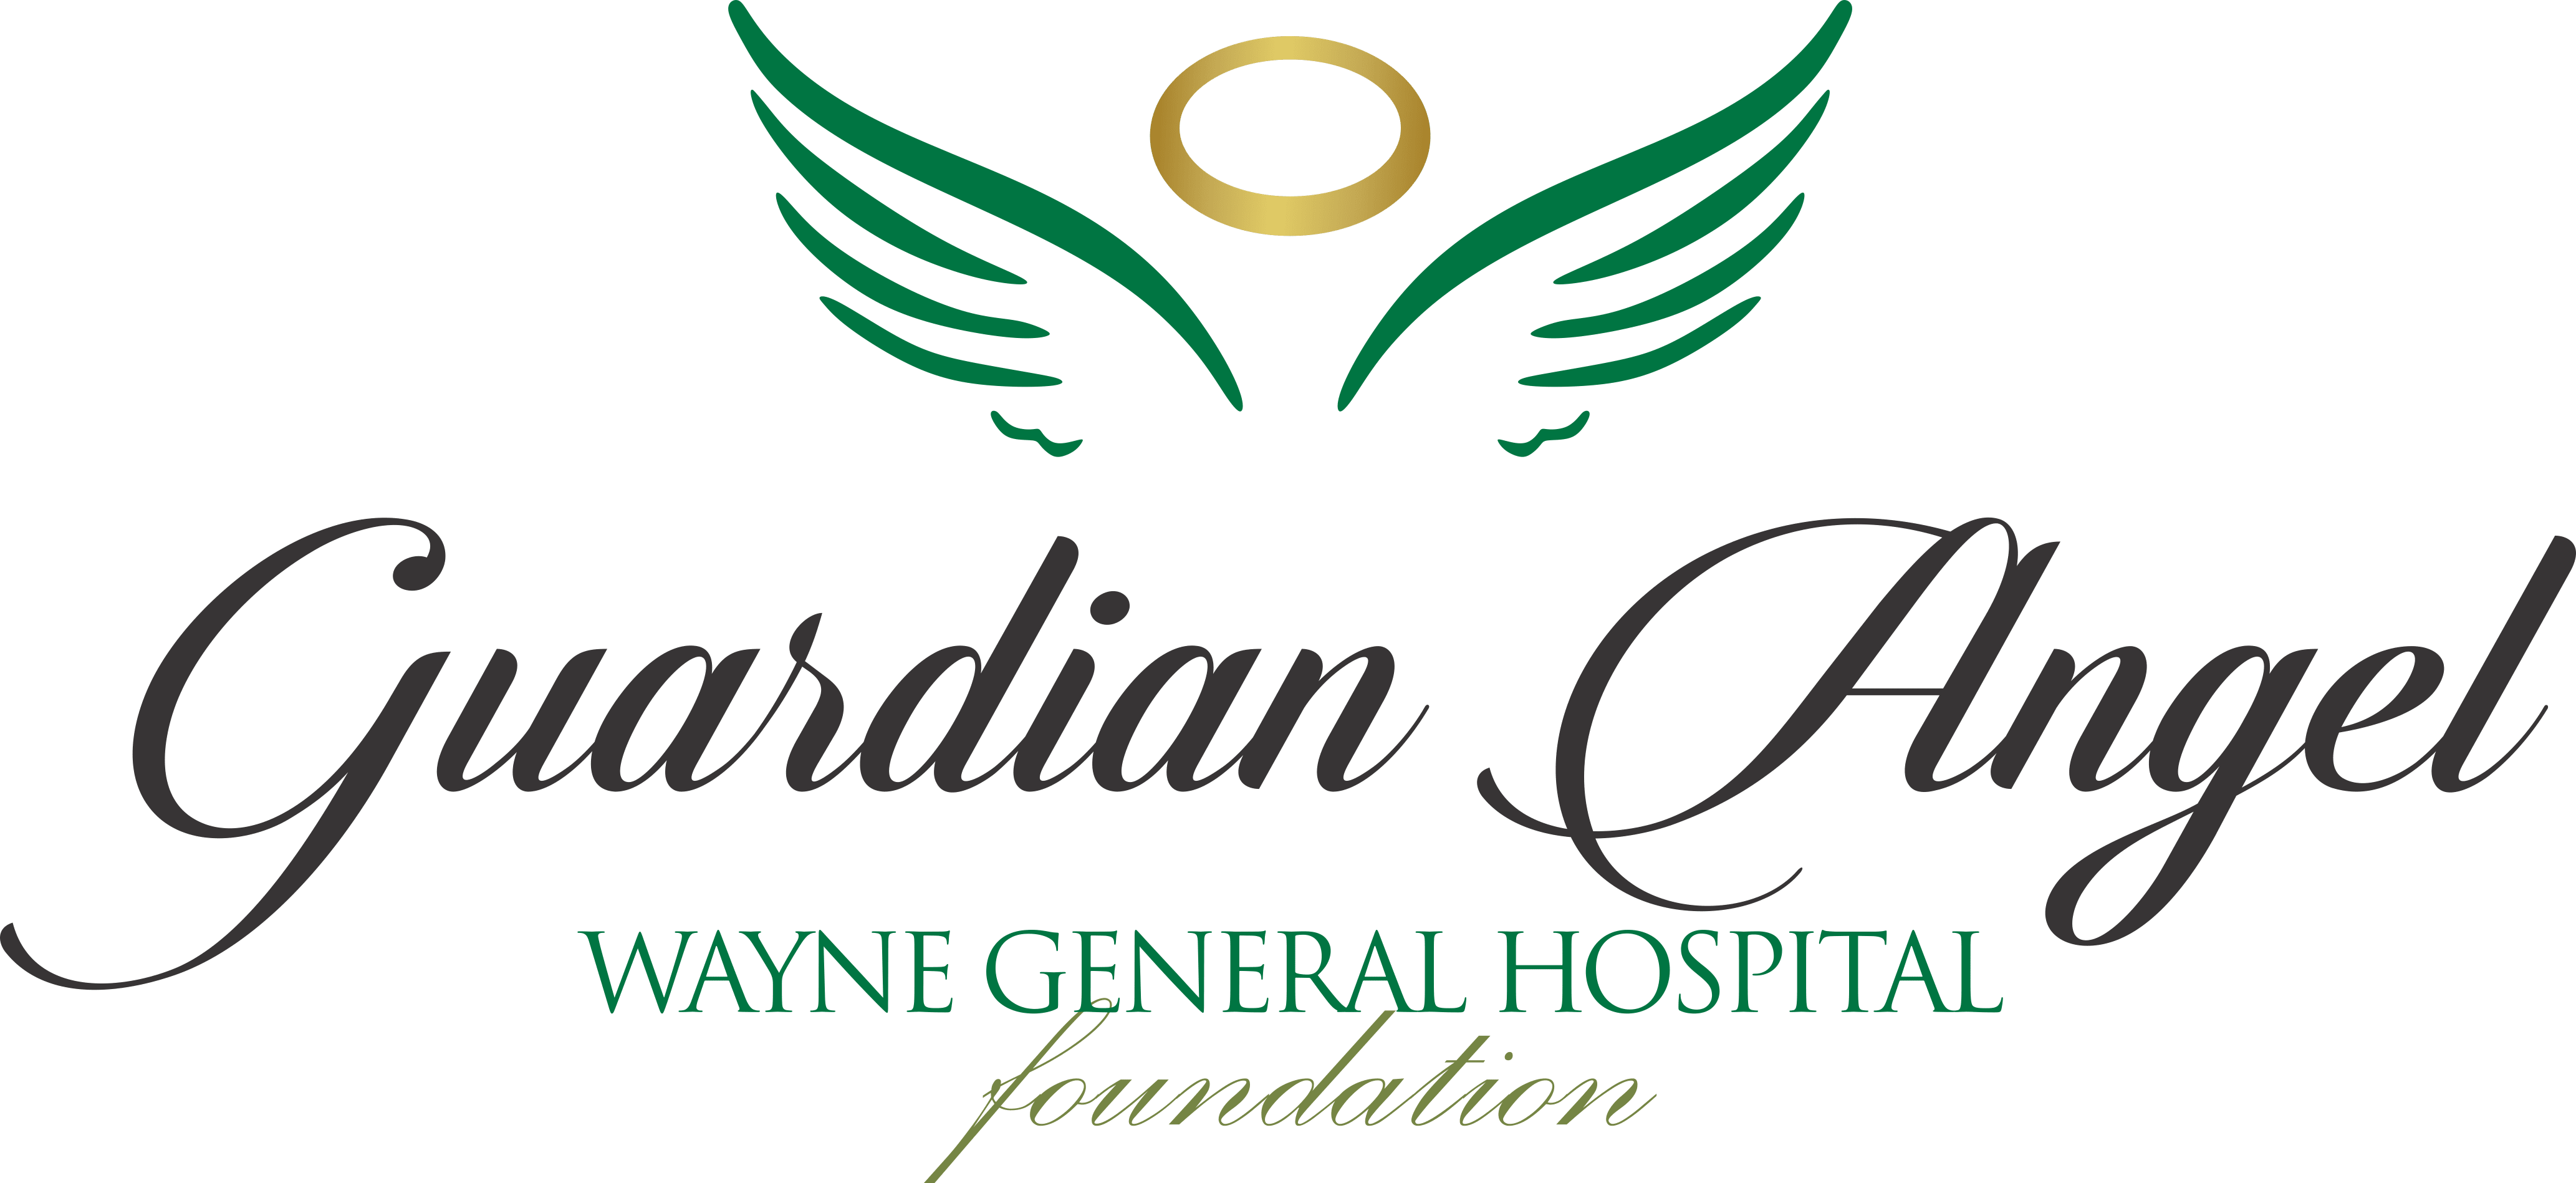 Wayne General Hospital Foundation